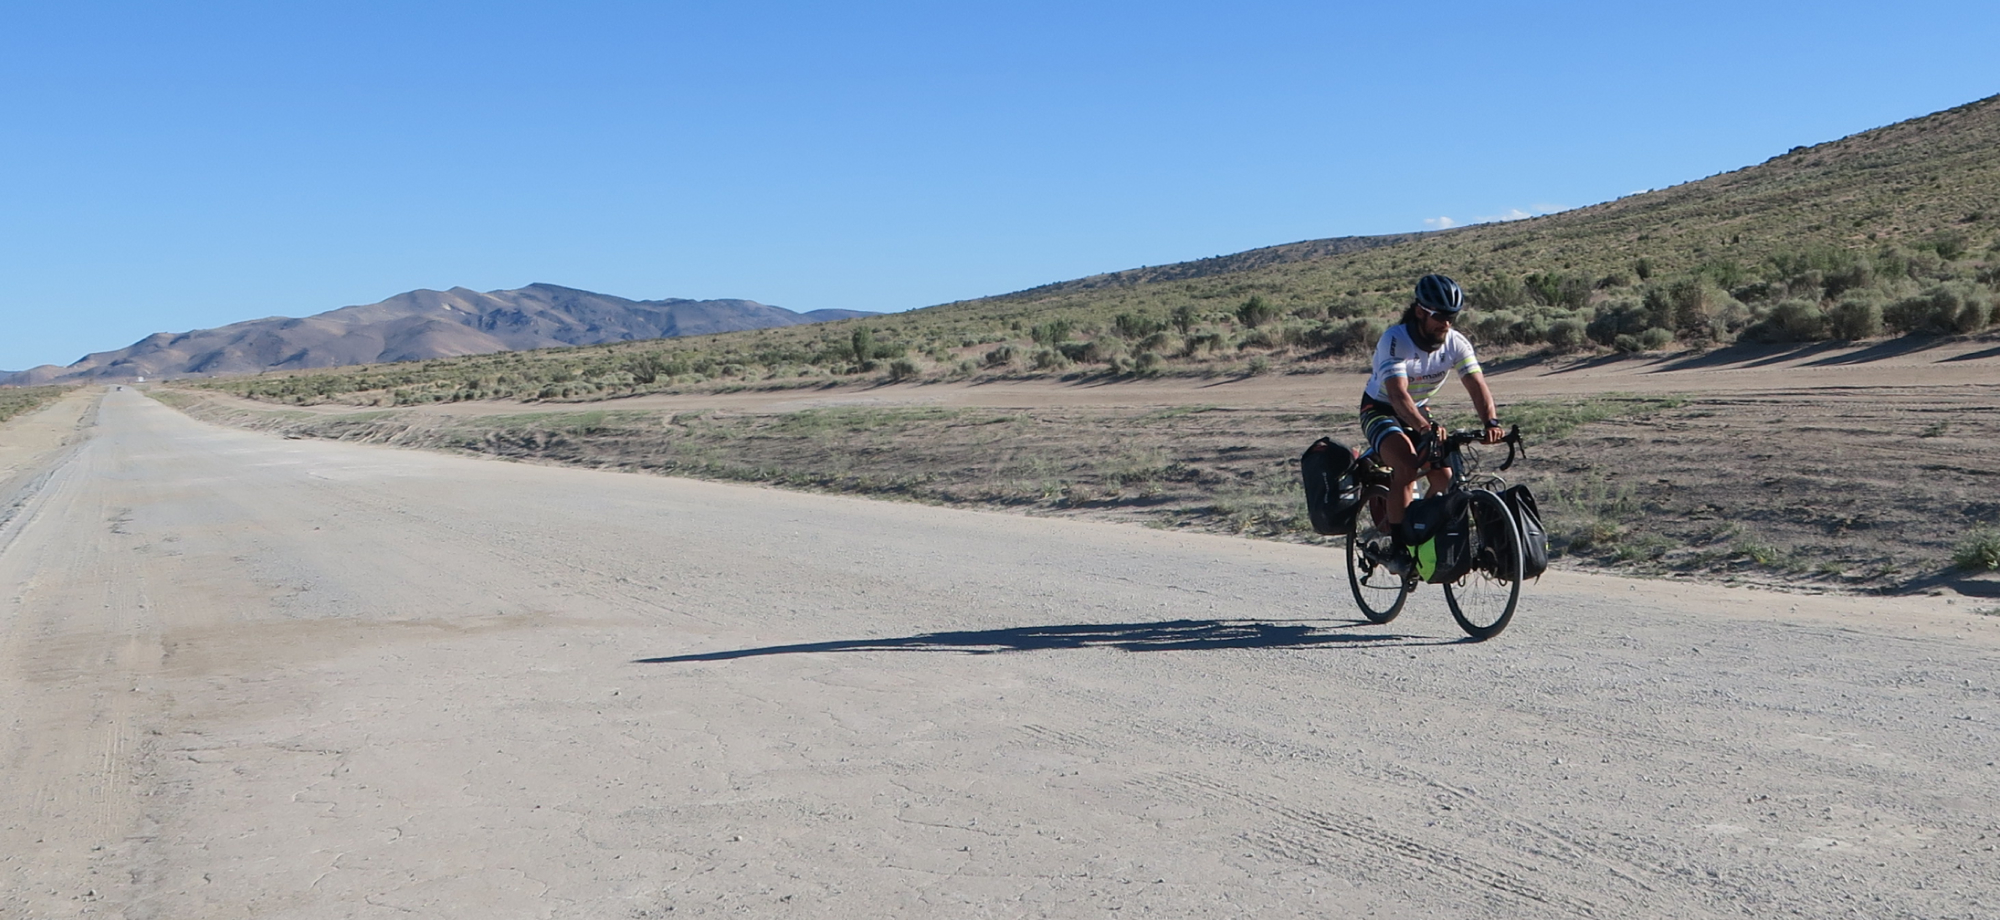 Covering new ground - Man bikepacking on gravel road